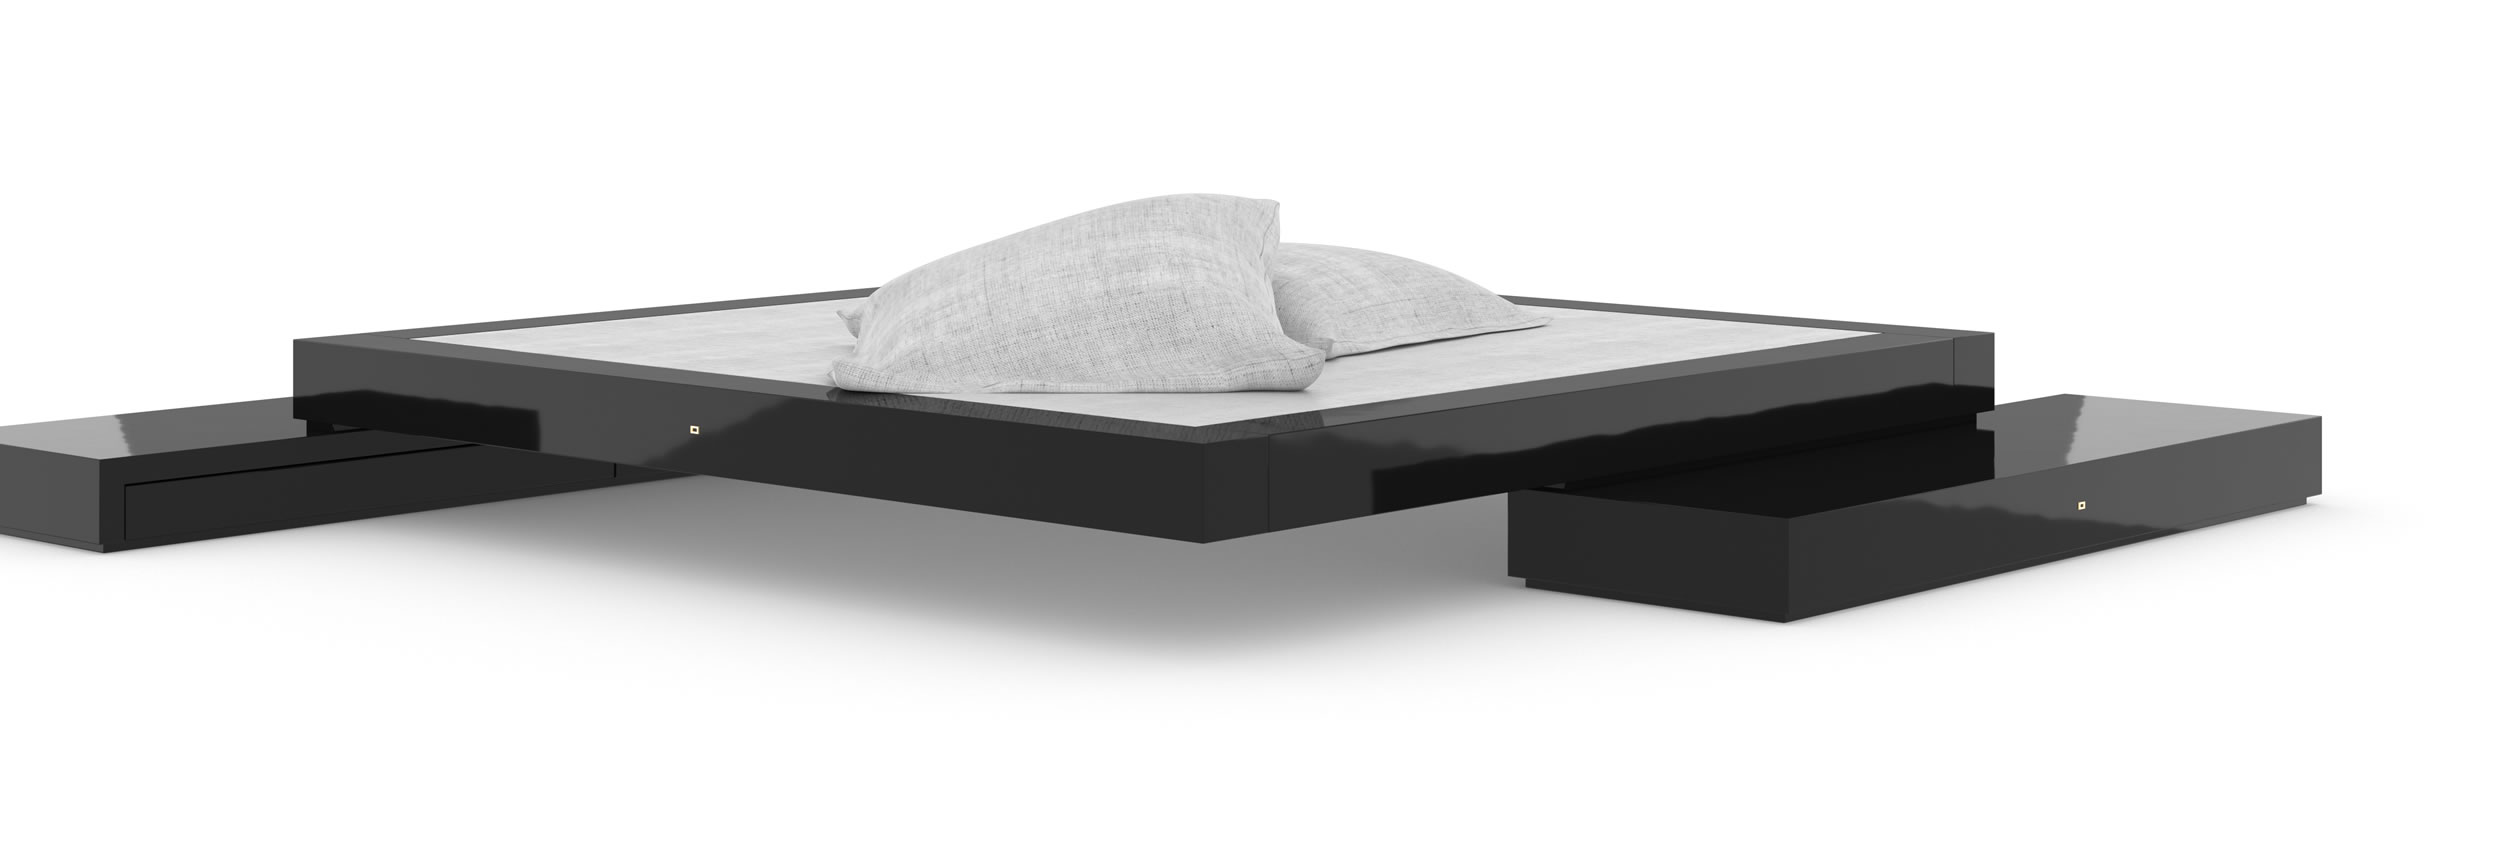 Design Bed Sideboards Black Glossy Exclusive Unique Custom Made InteriorFELIX SCHWAKE